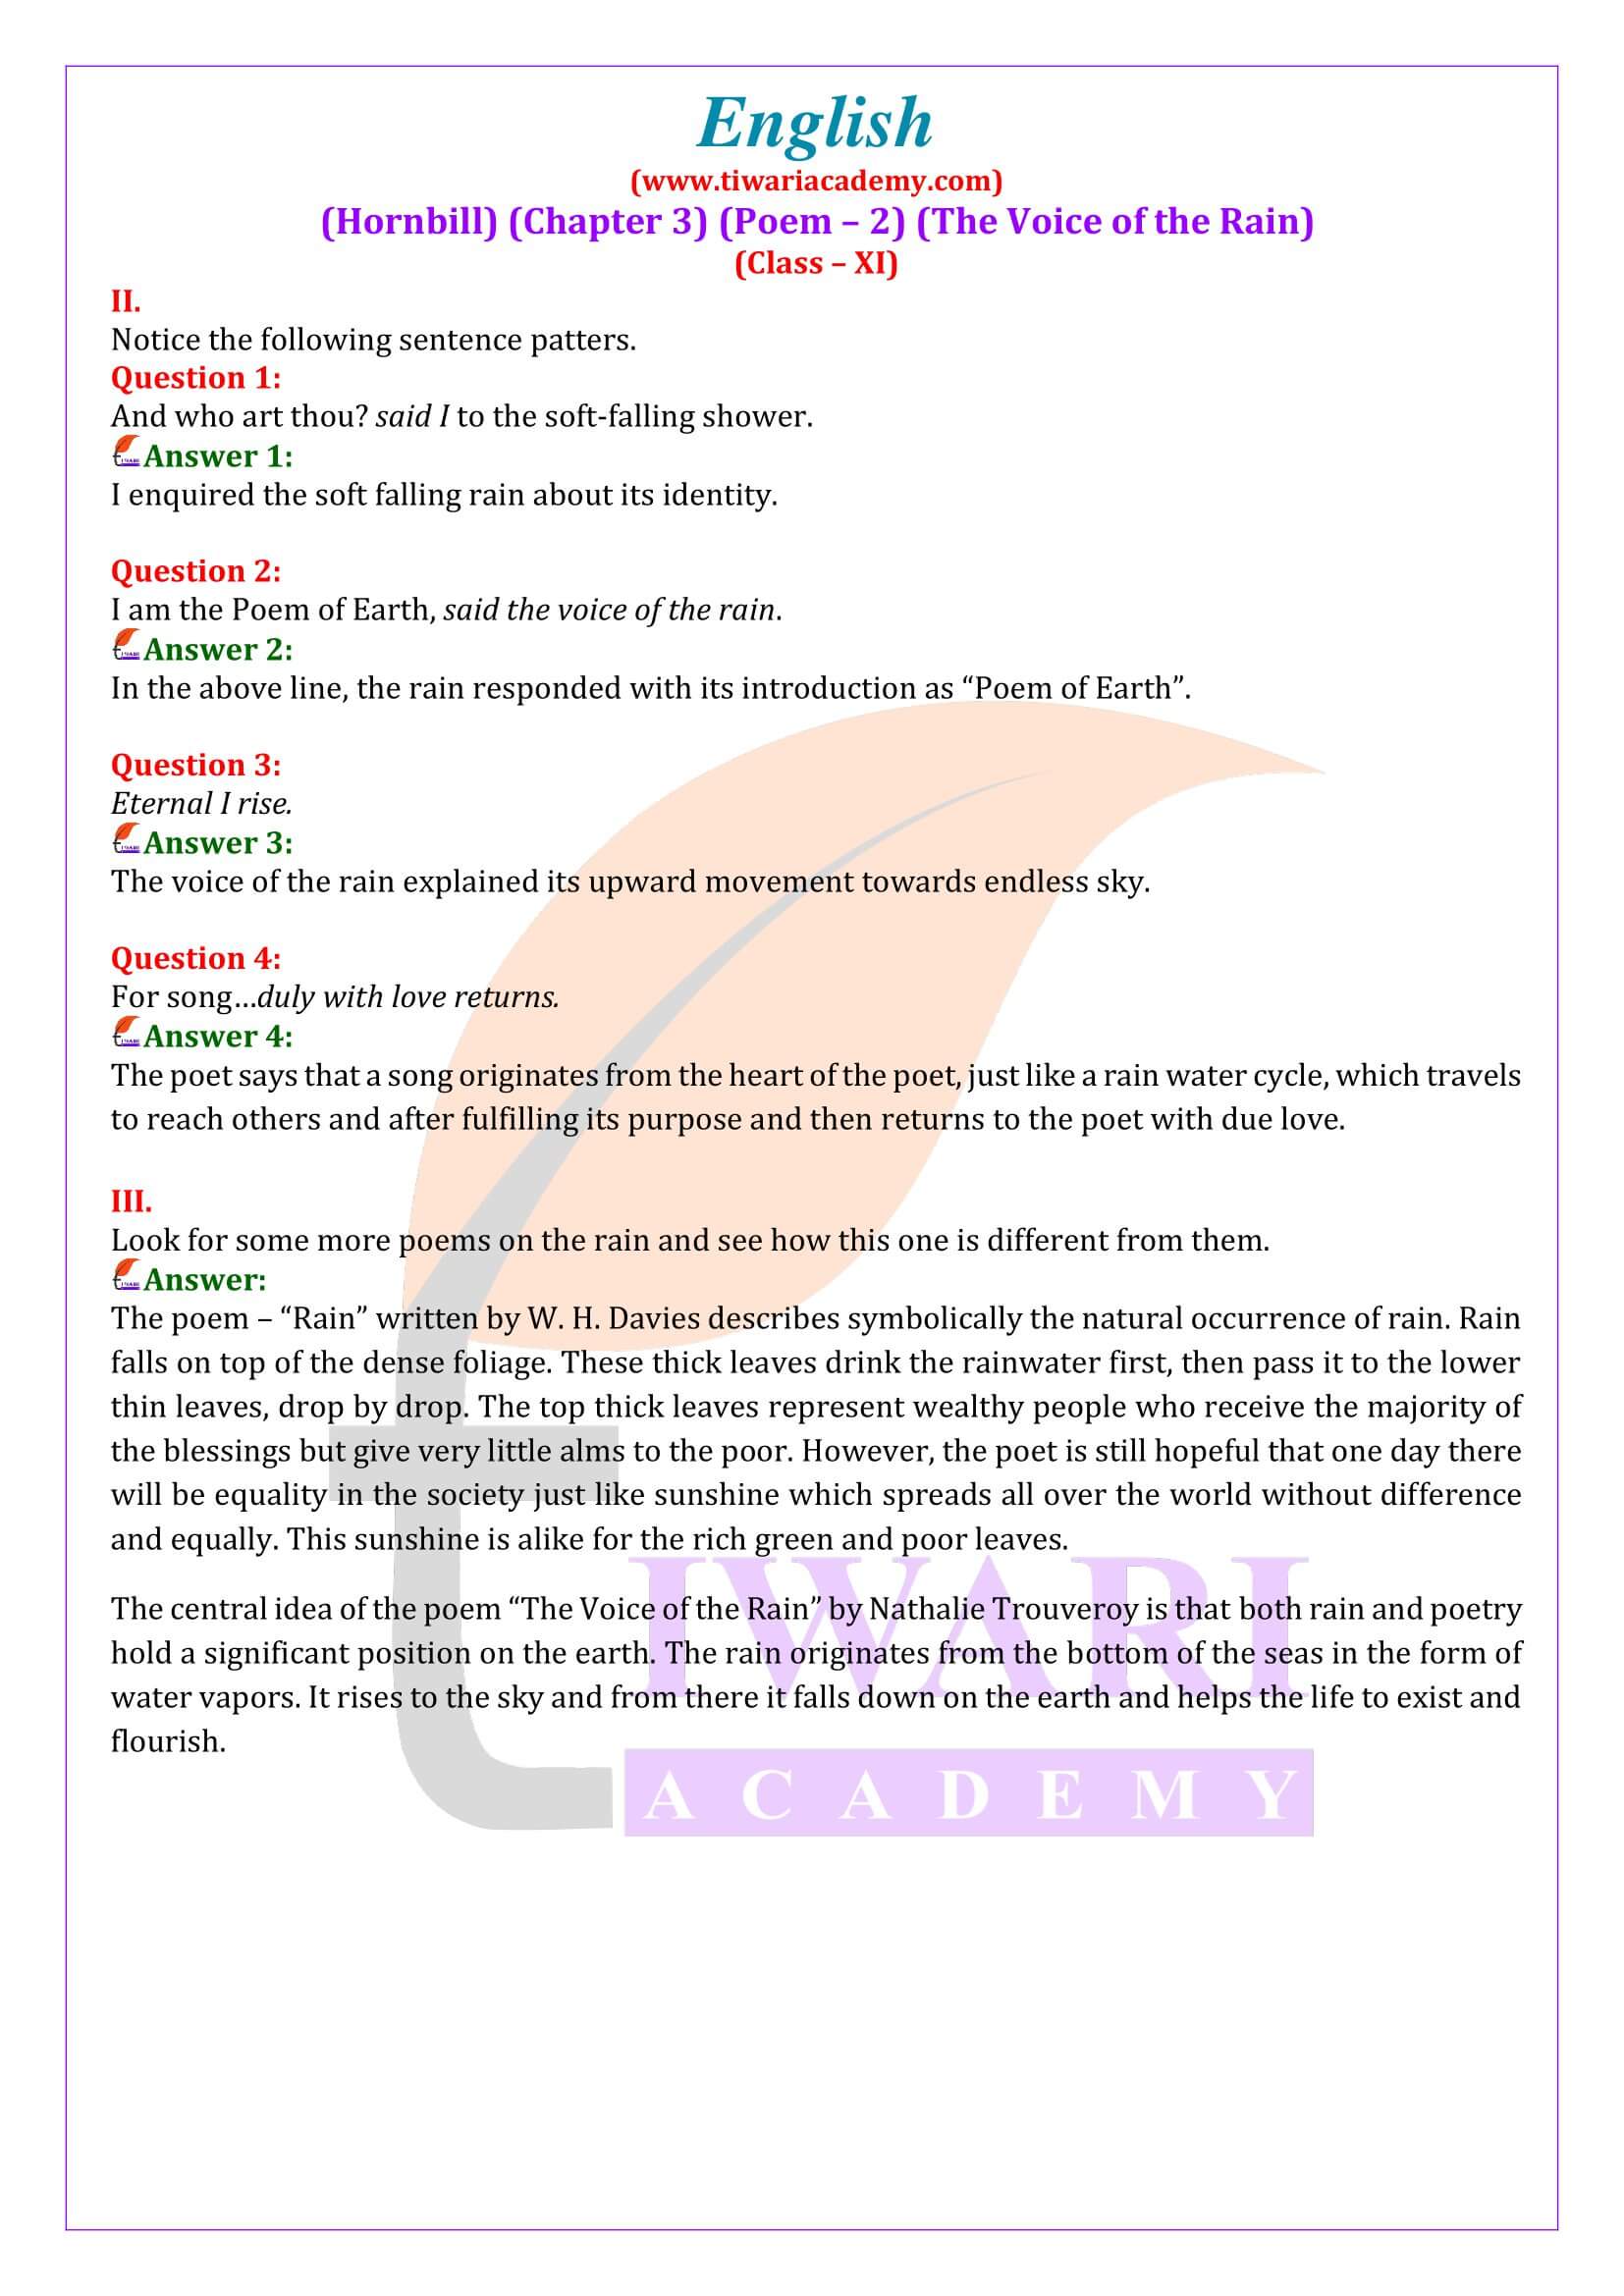 Class 11 English Hornbill Chapter 3 Poem